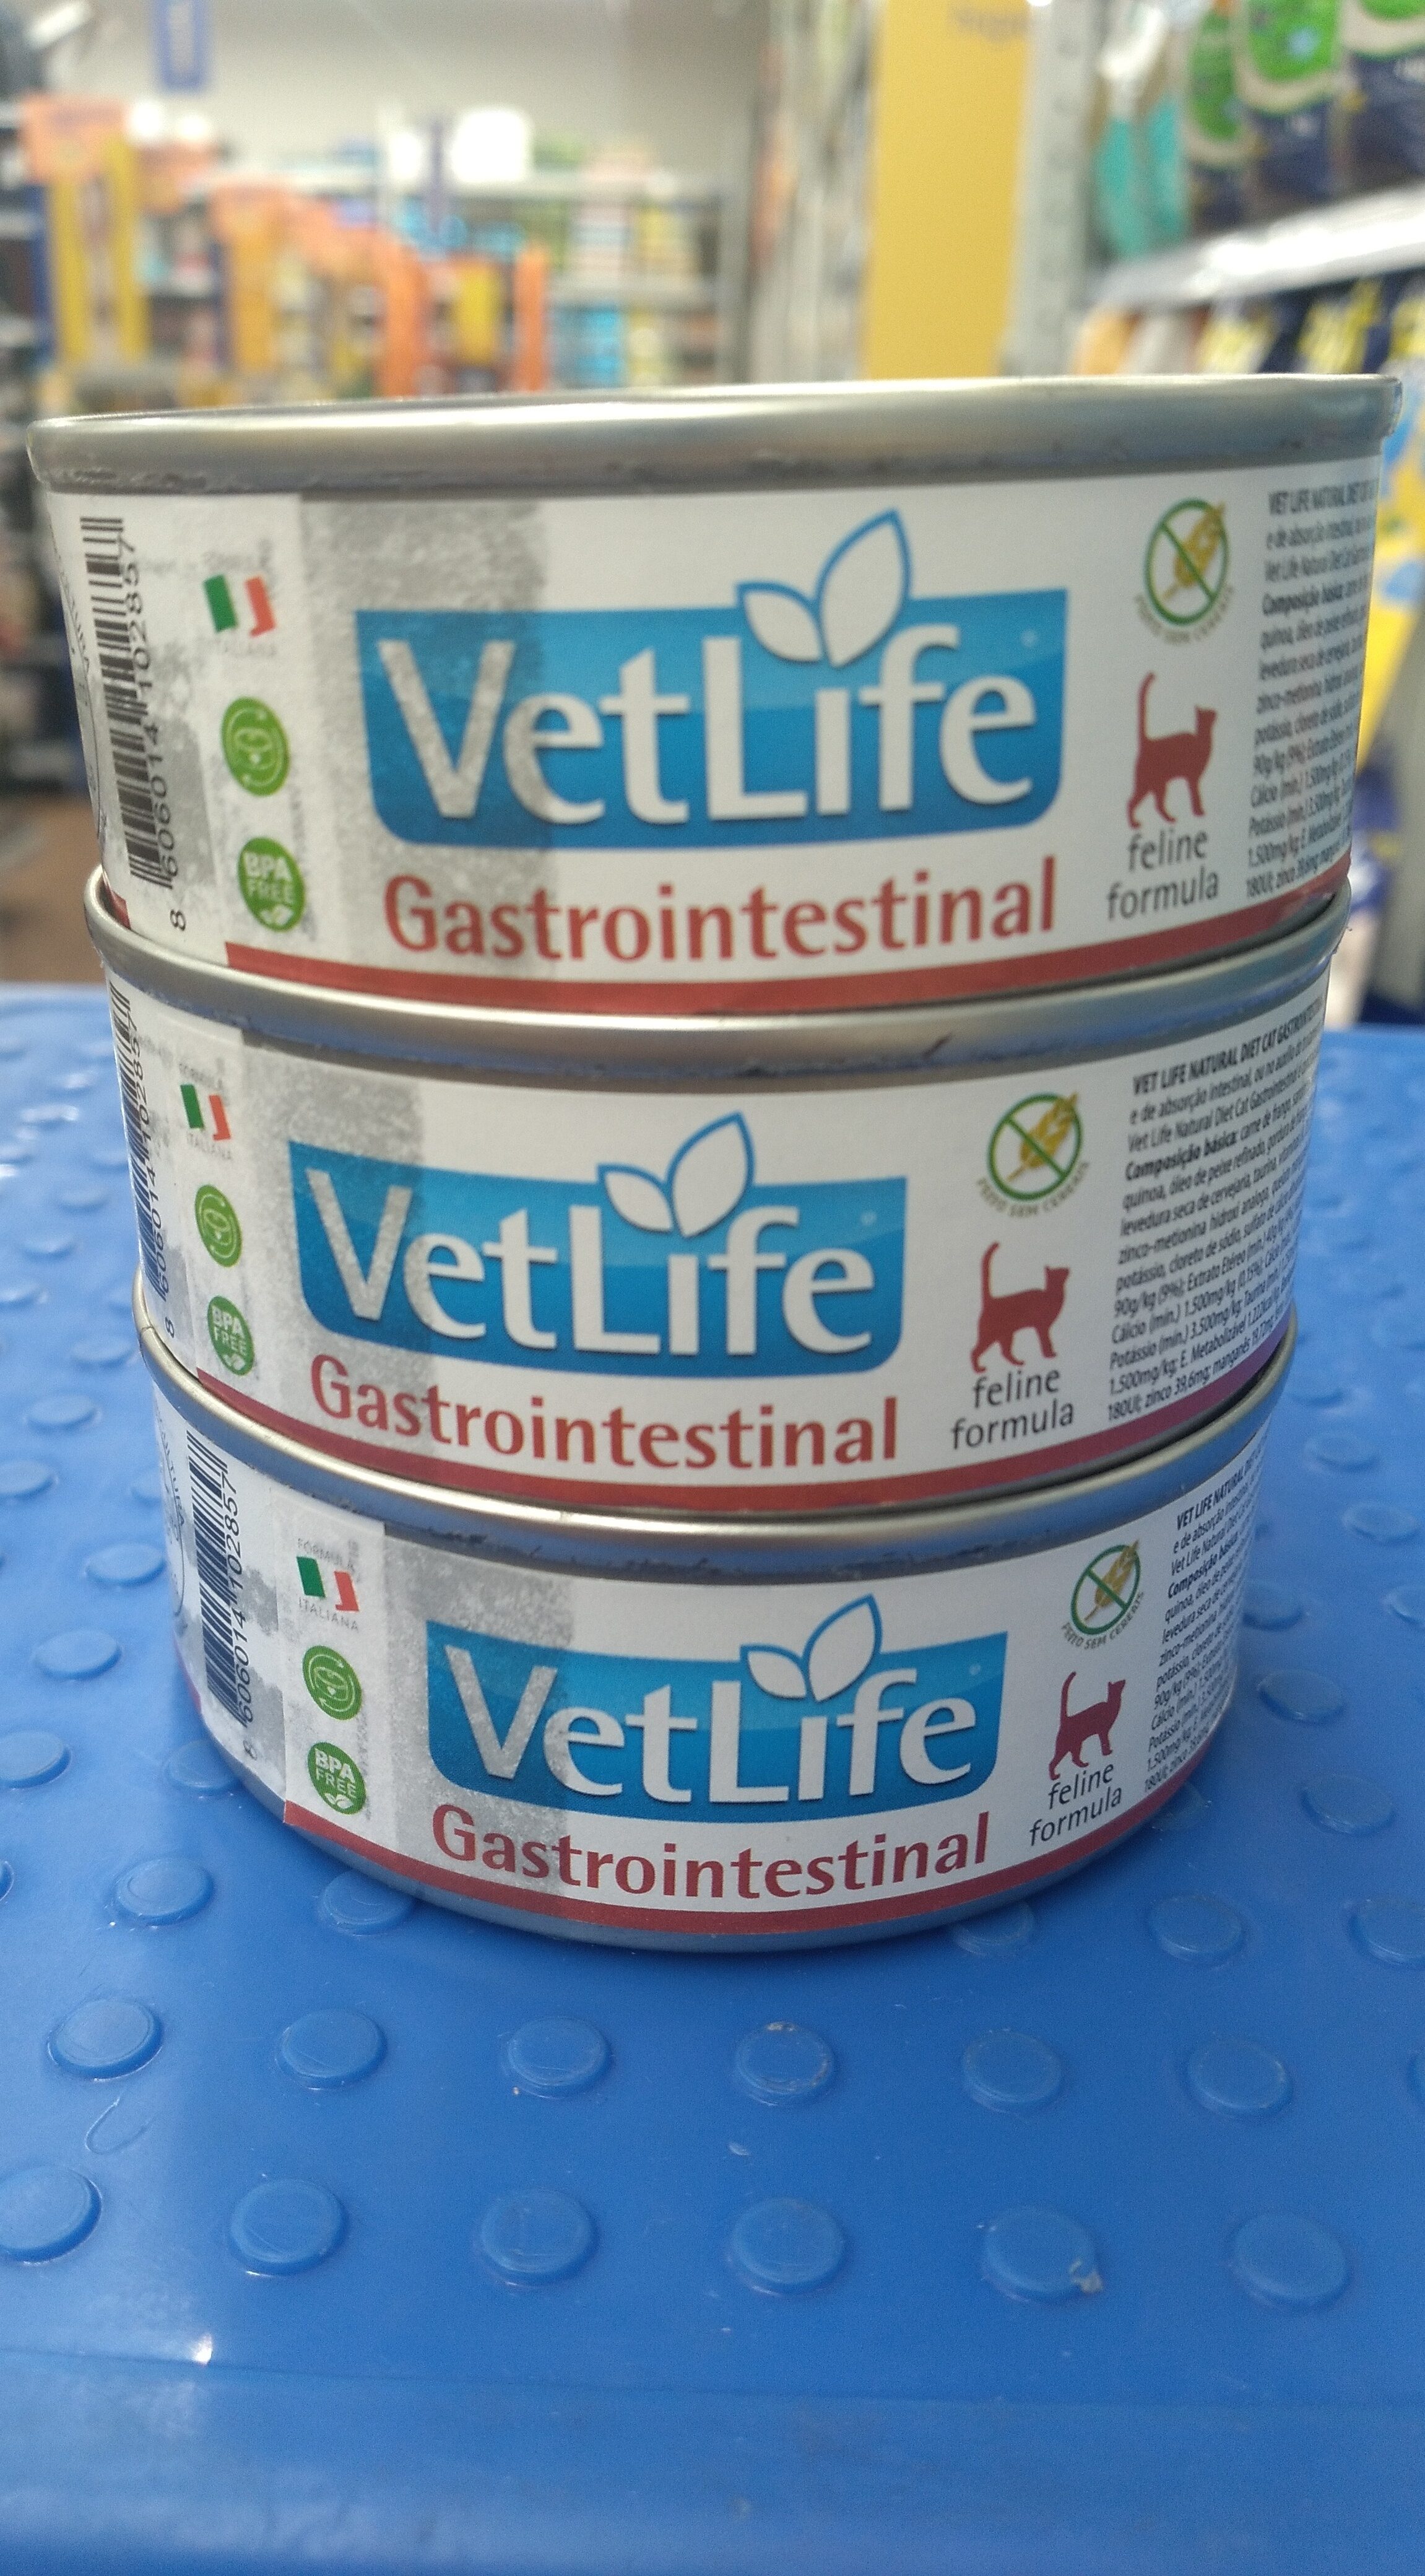 Vet life lt gastrointestinal 85g - Product - pt